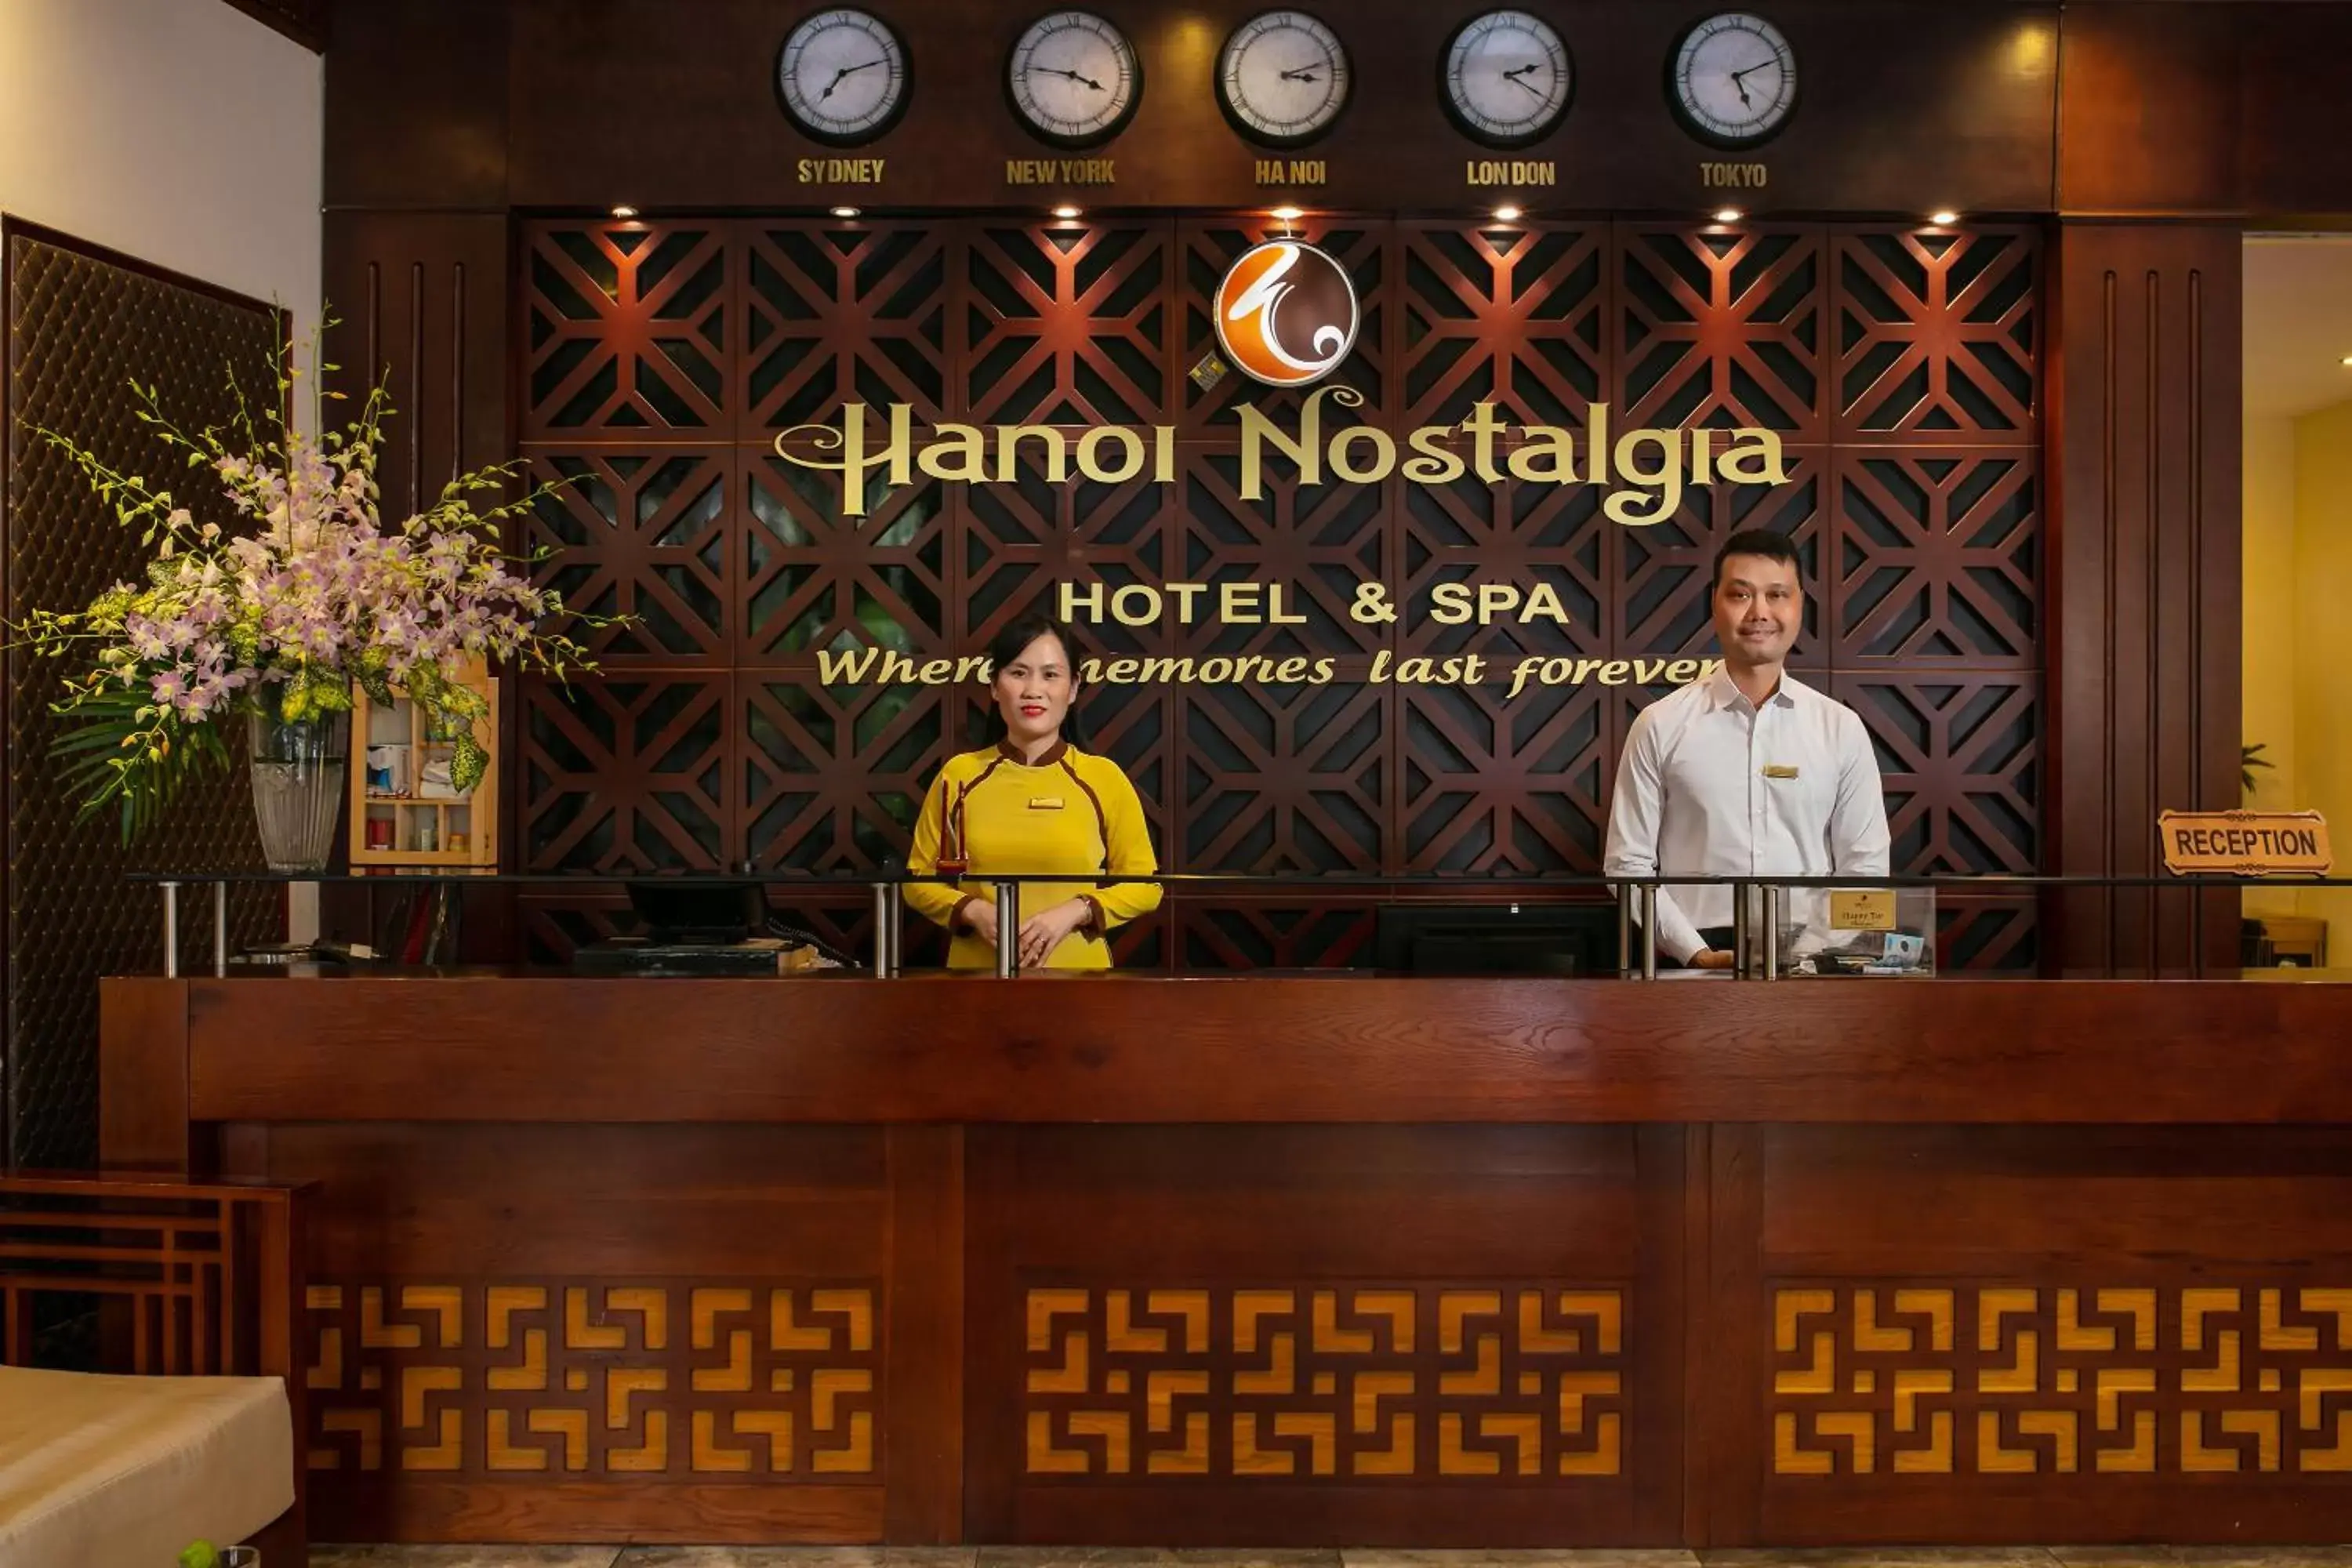 Lobby or reception in Hanoi Nostalgia Hotel & Spa